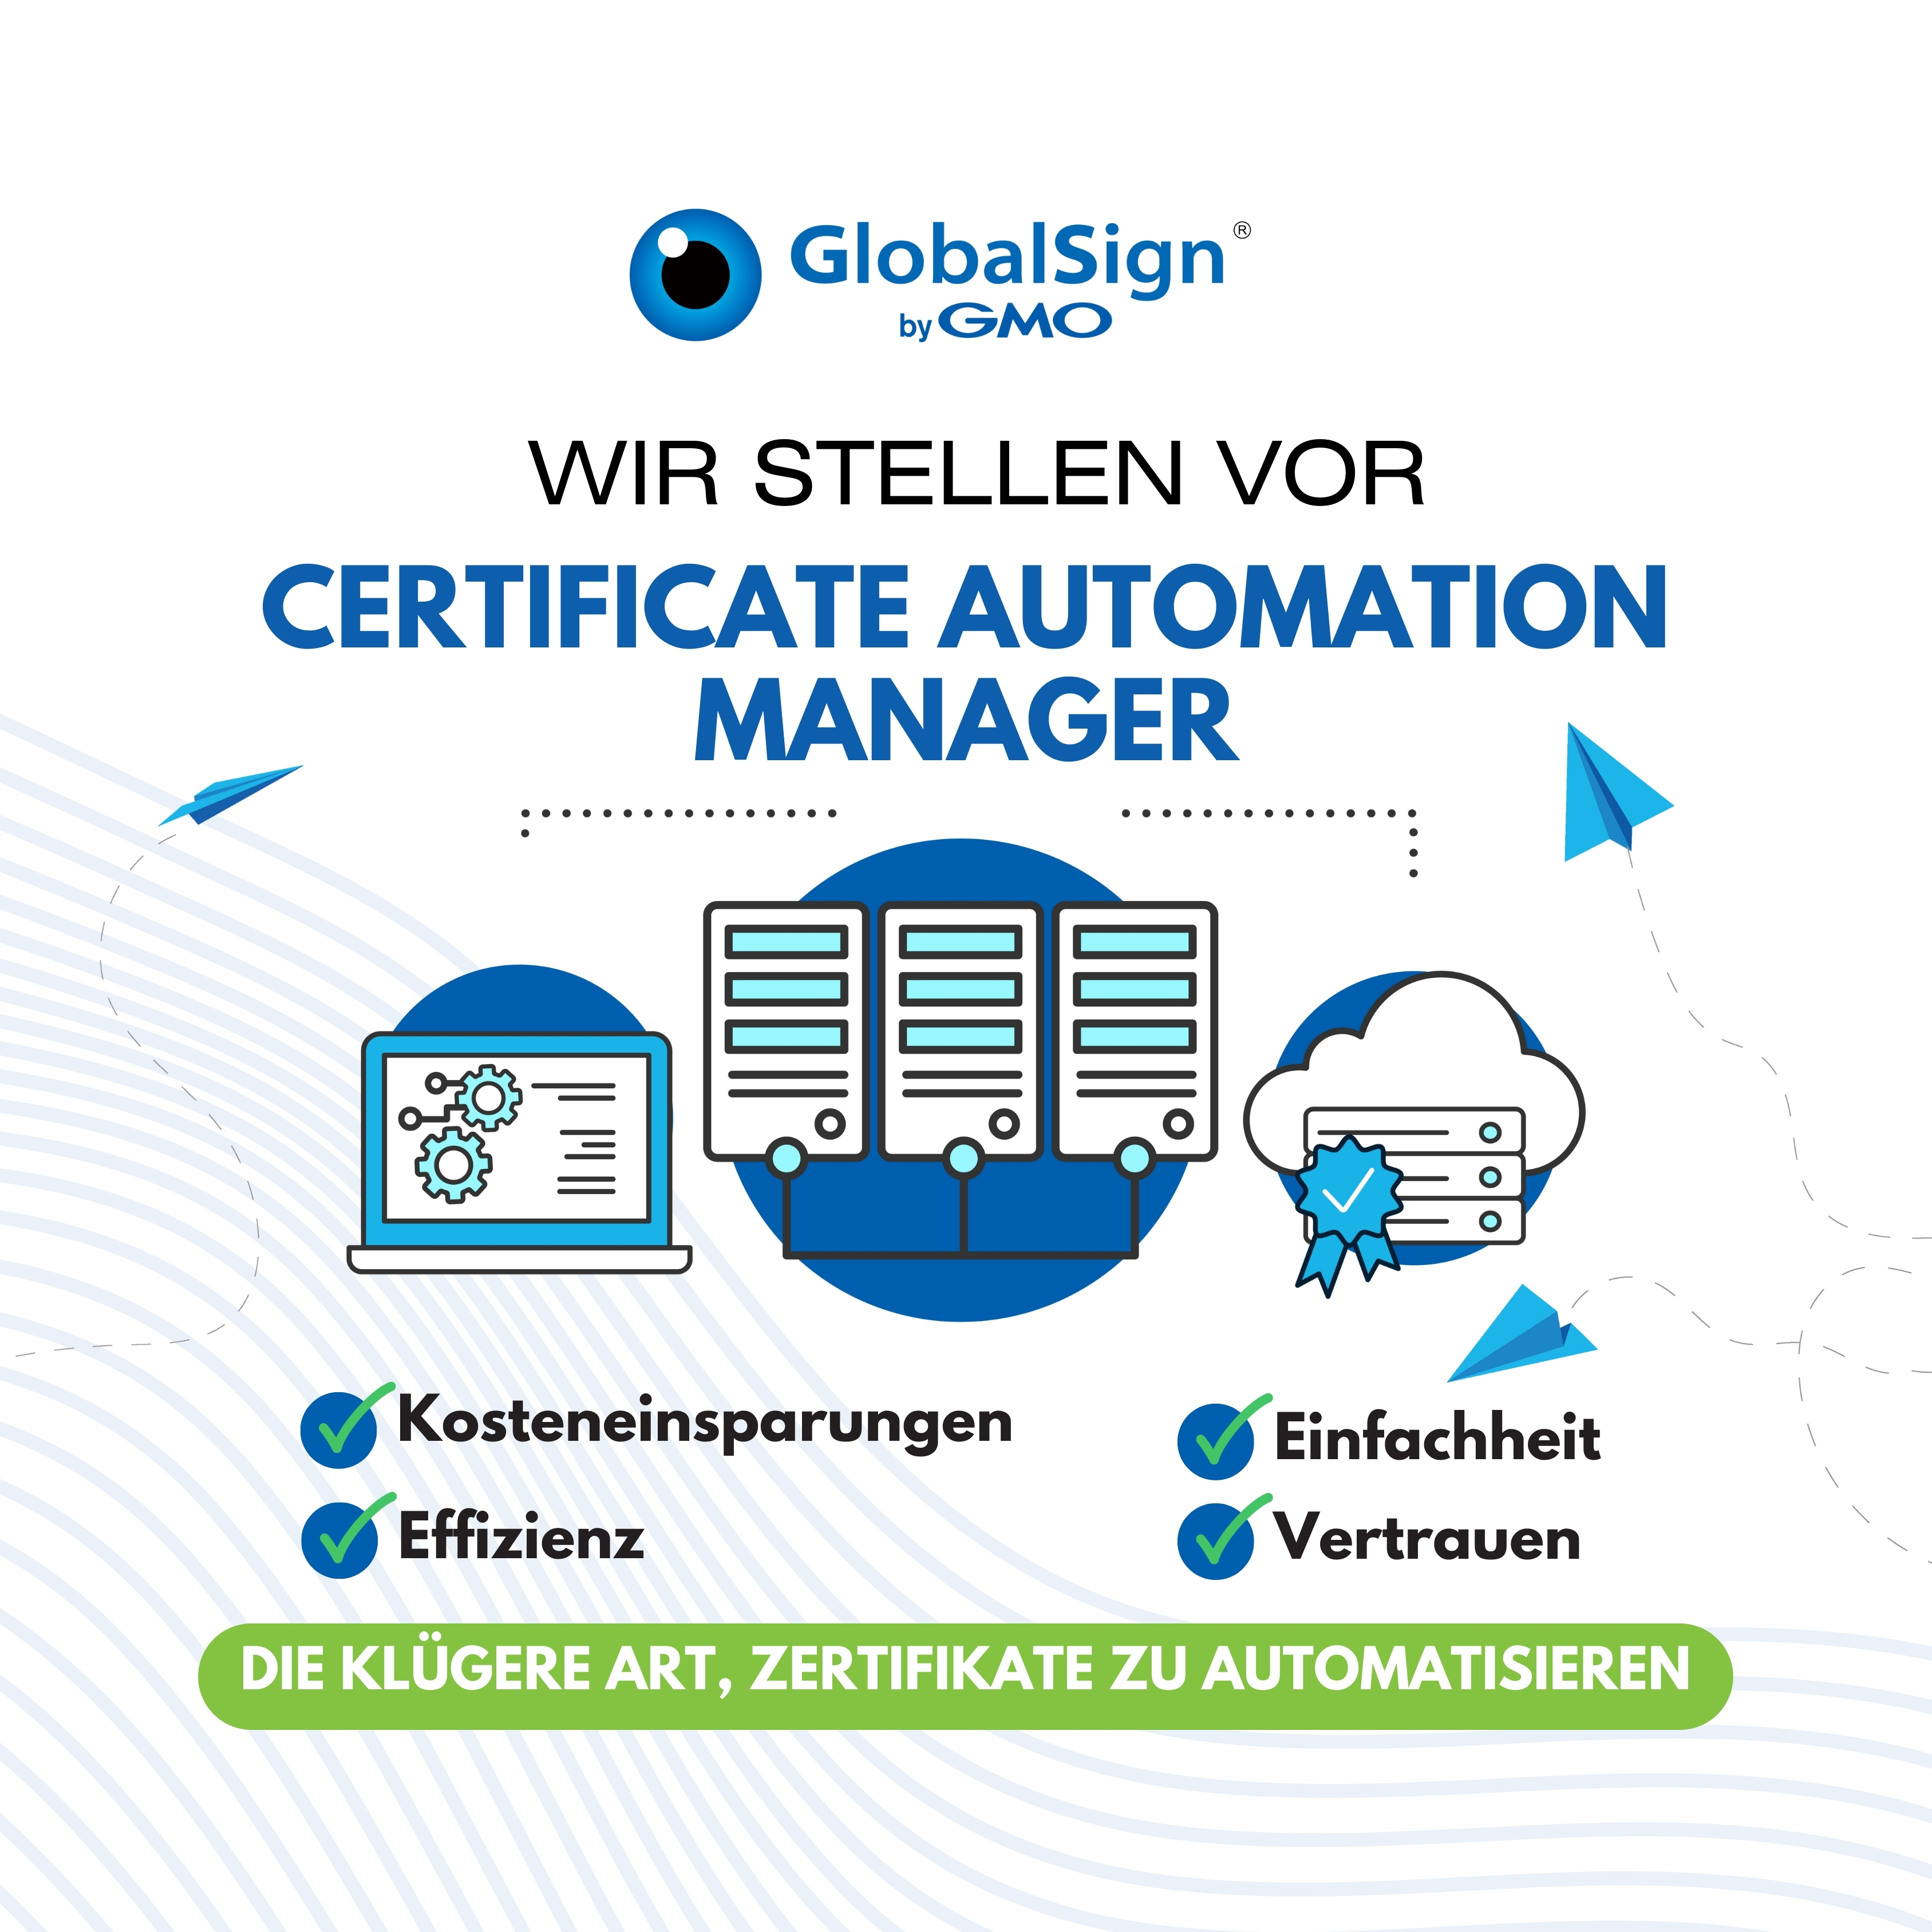 GMO GlobalSign präsentiert den Certificate Automation Manager